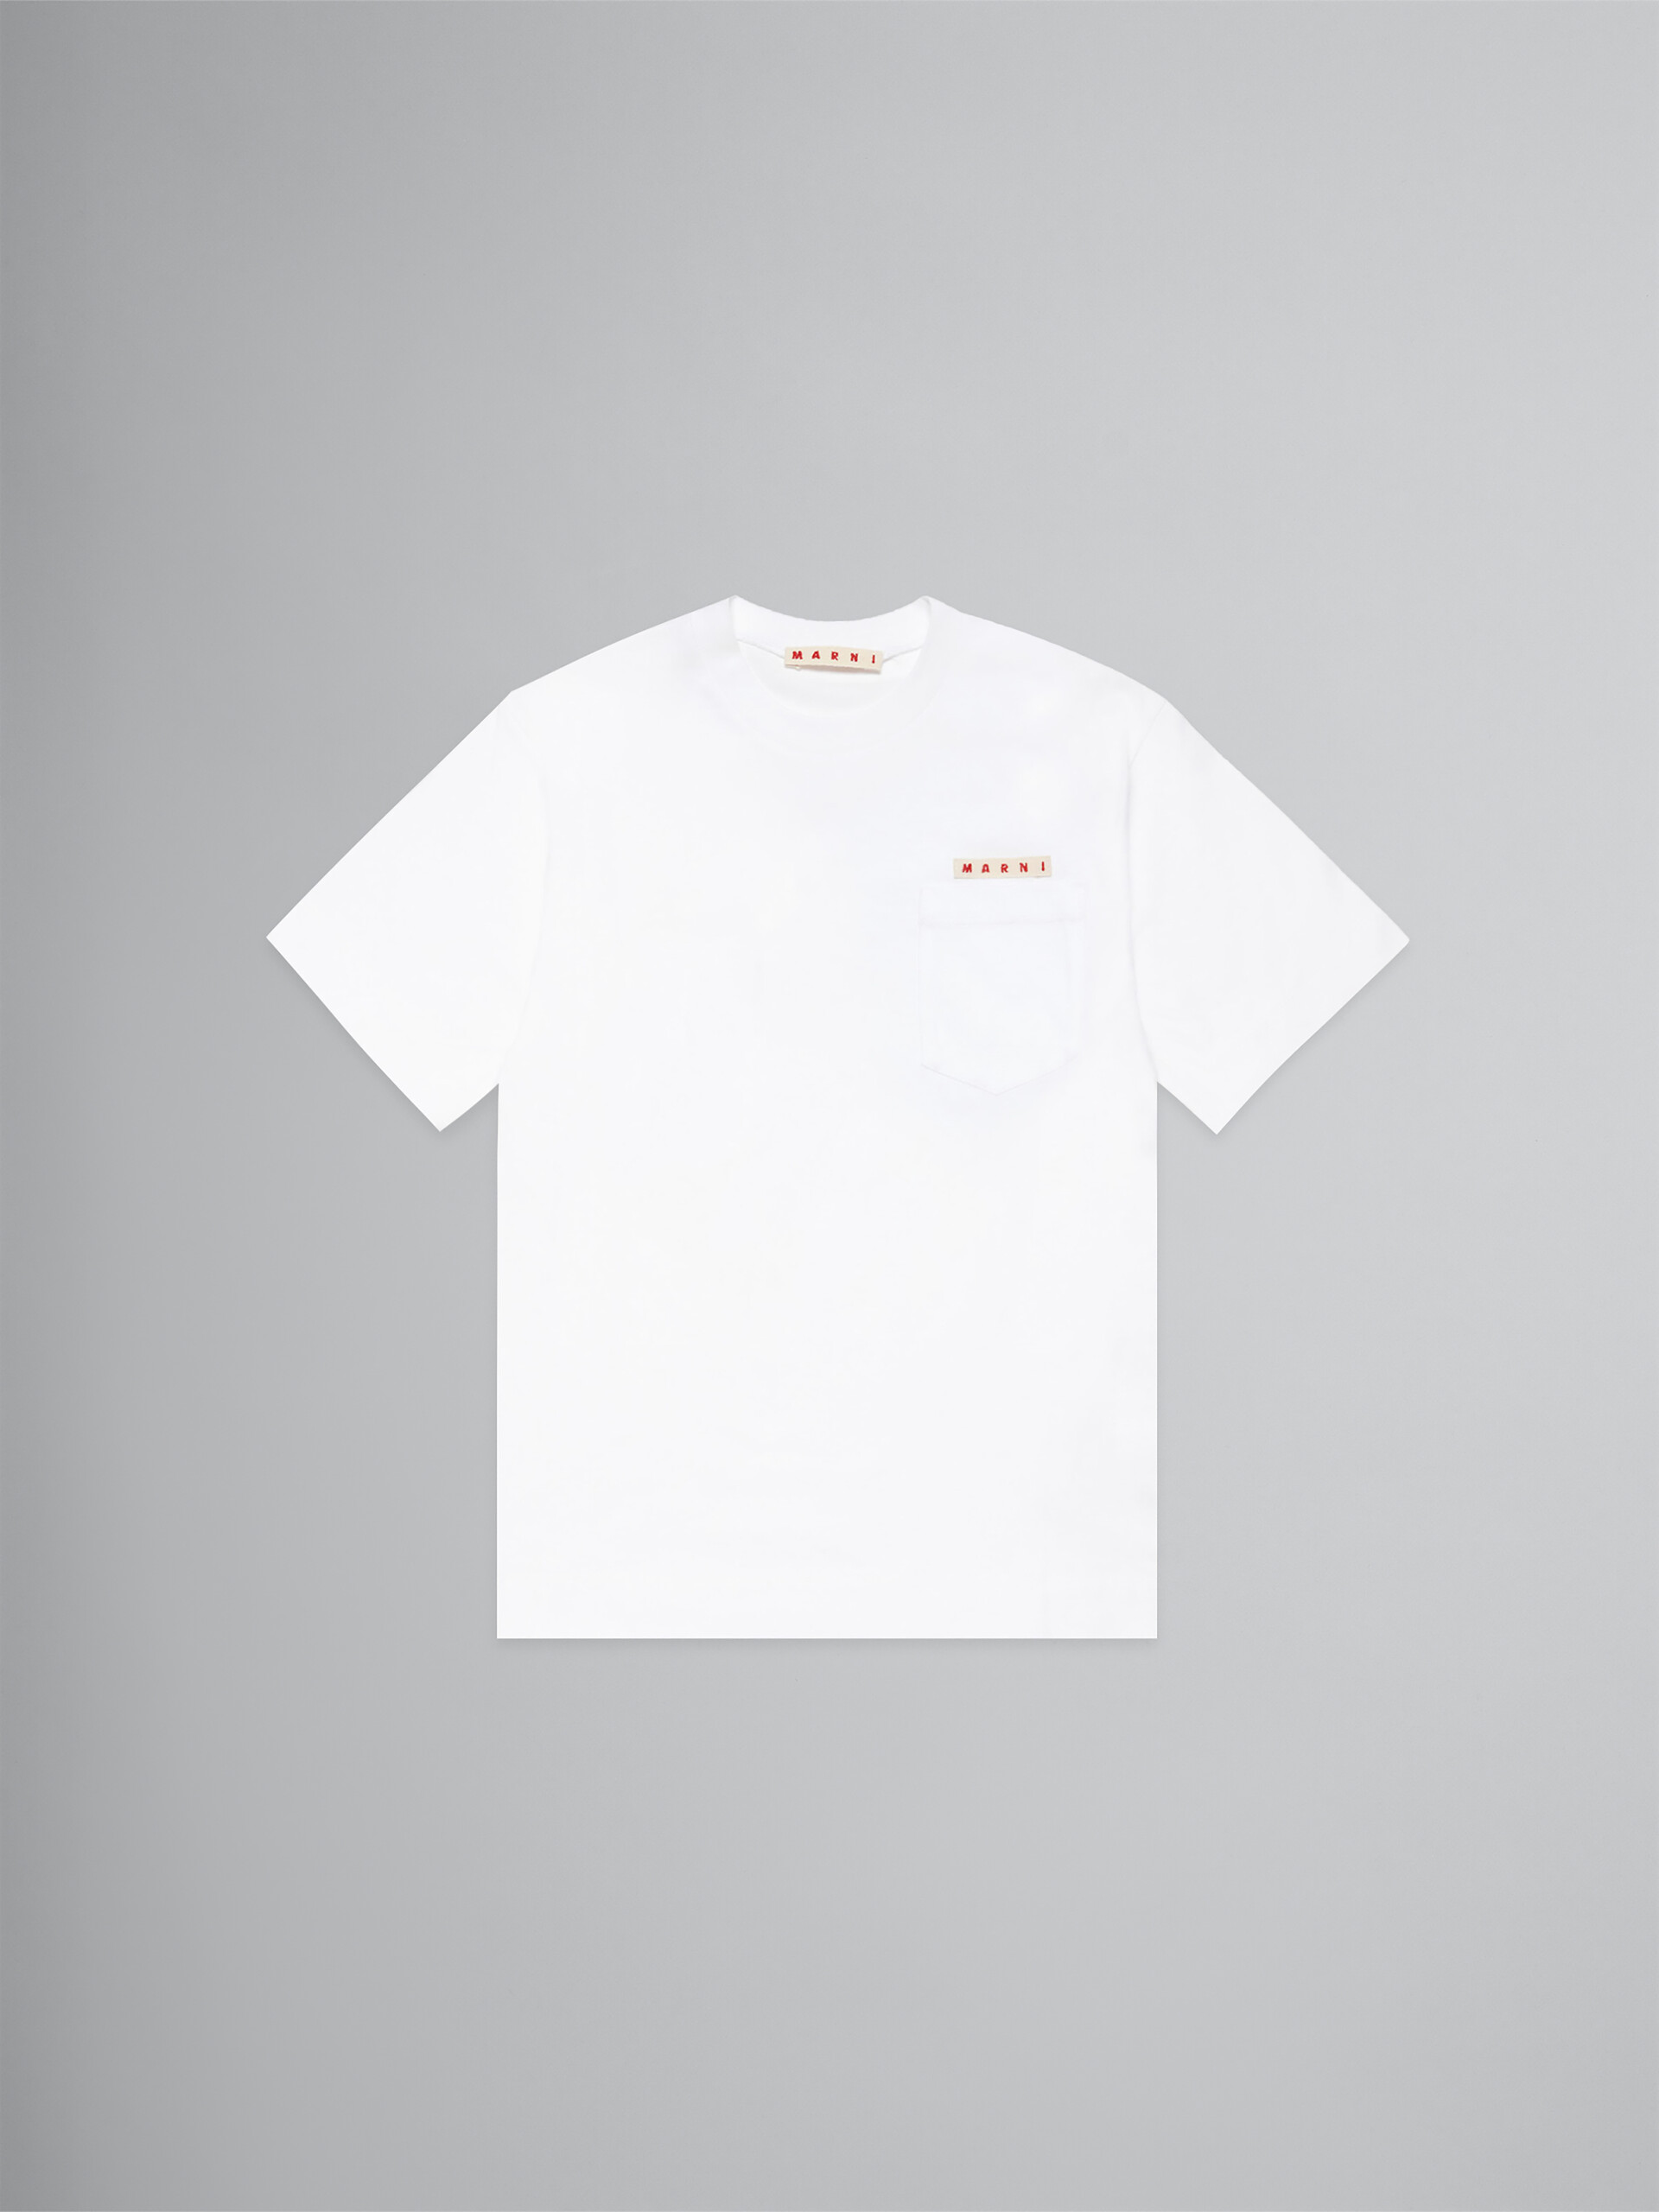 T-shirt blanc avec poche - T-shirts - Image 1